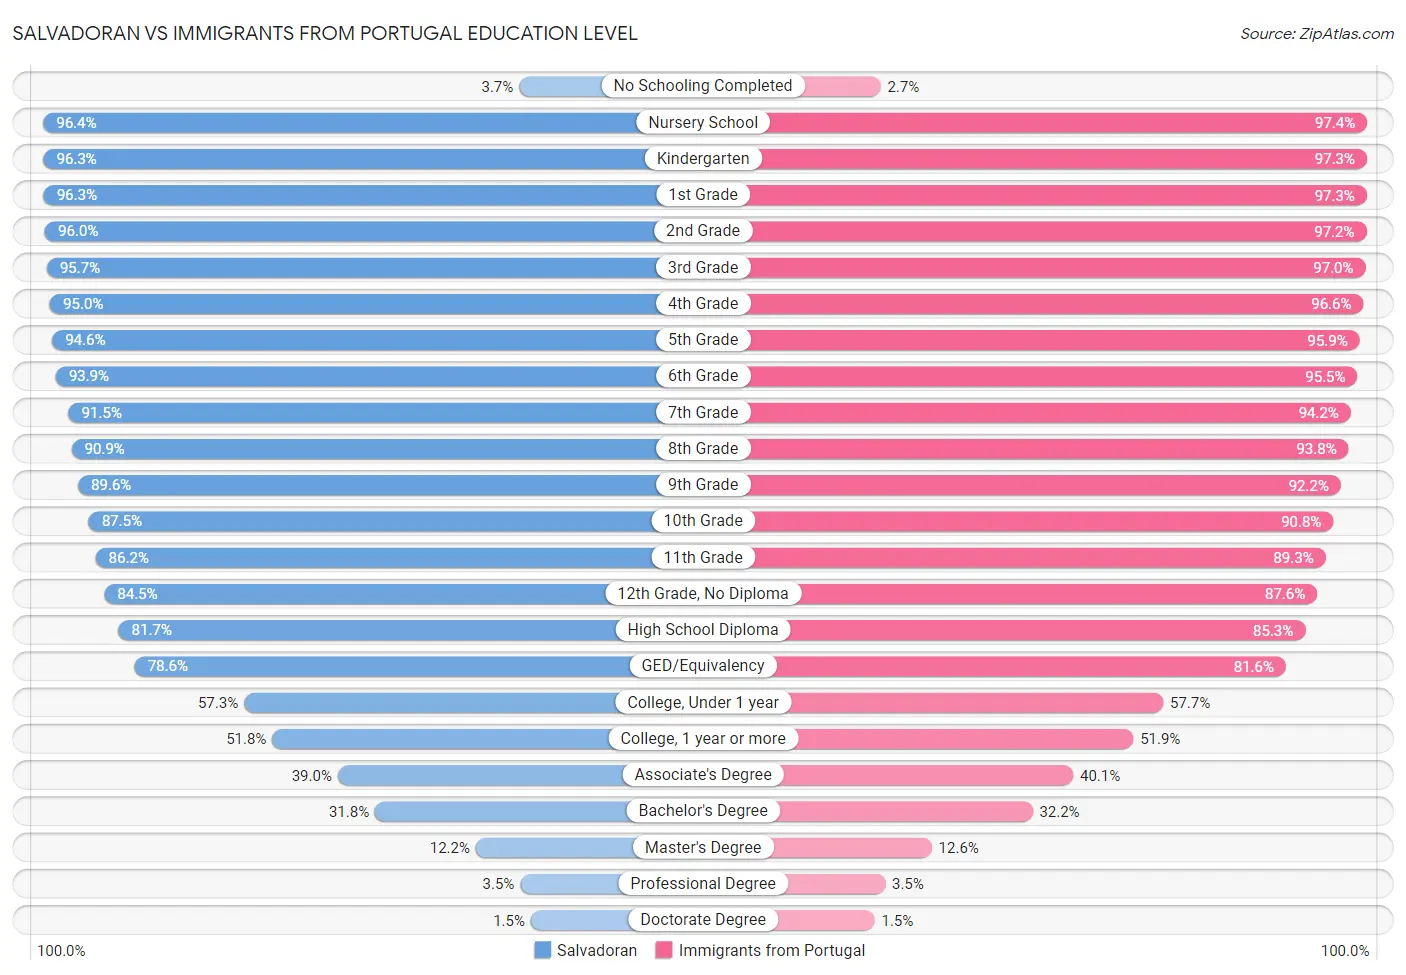 Salvadoran vs Immigrants from Portugal Education Level